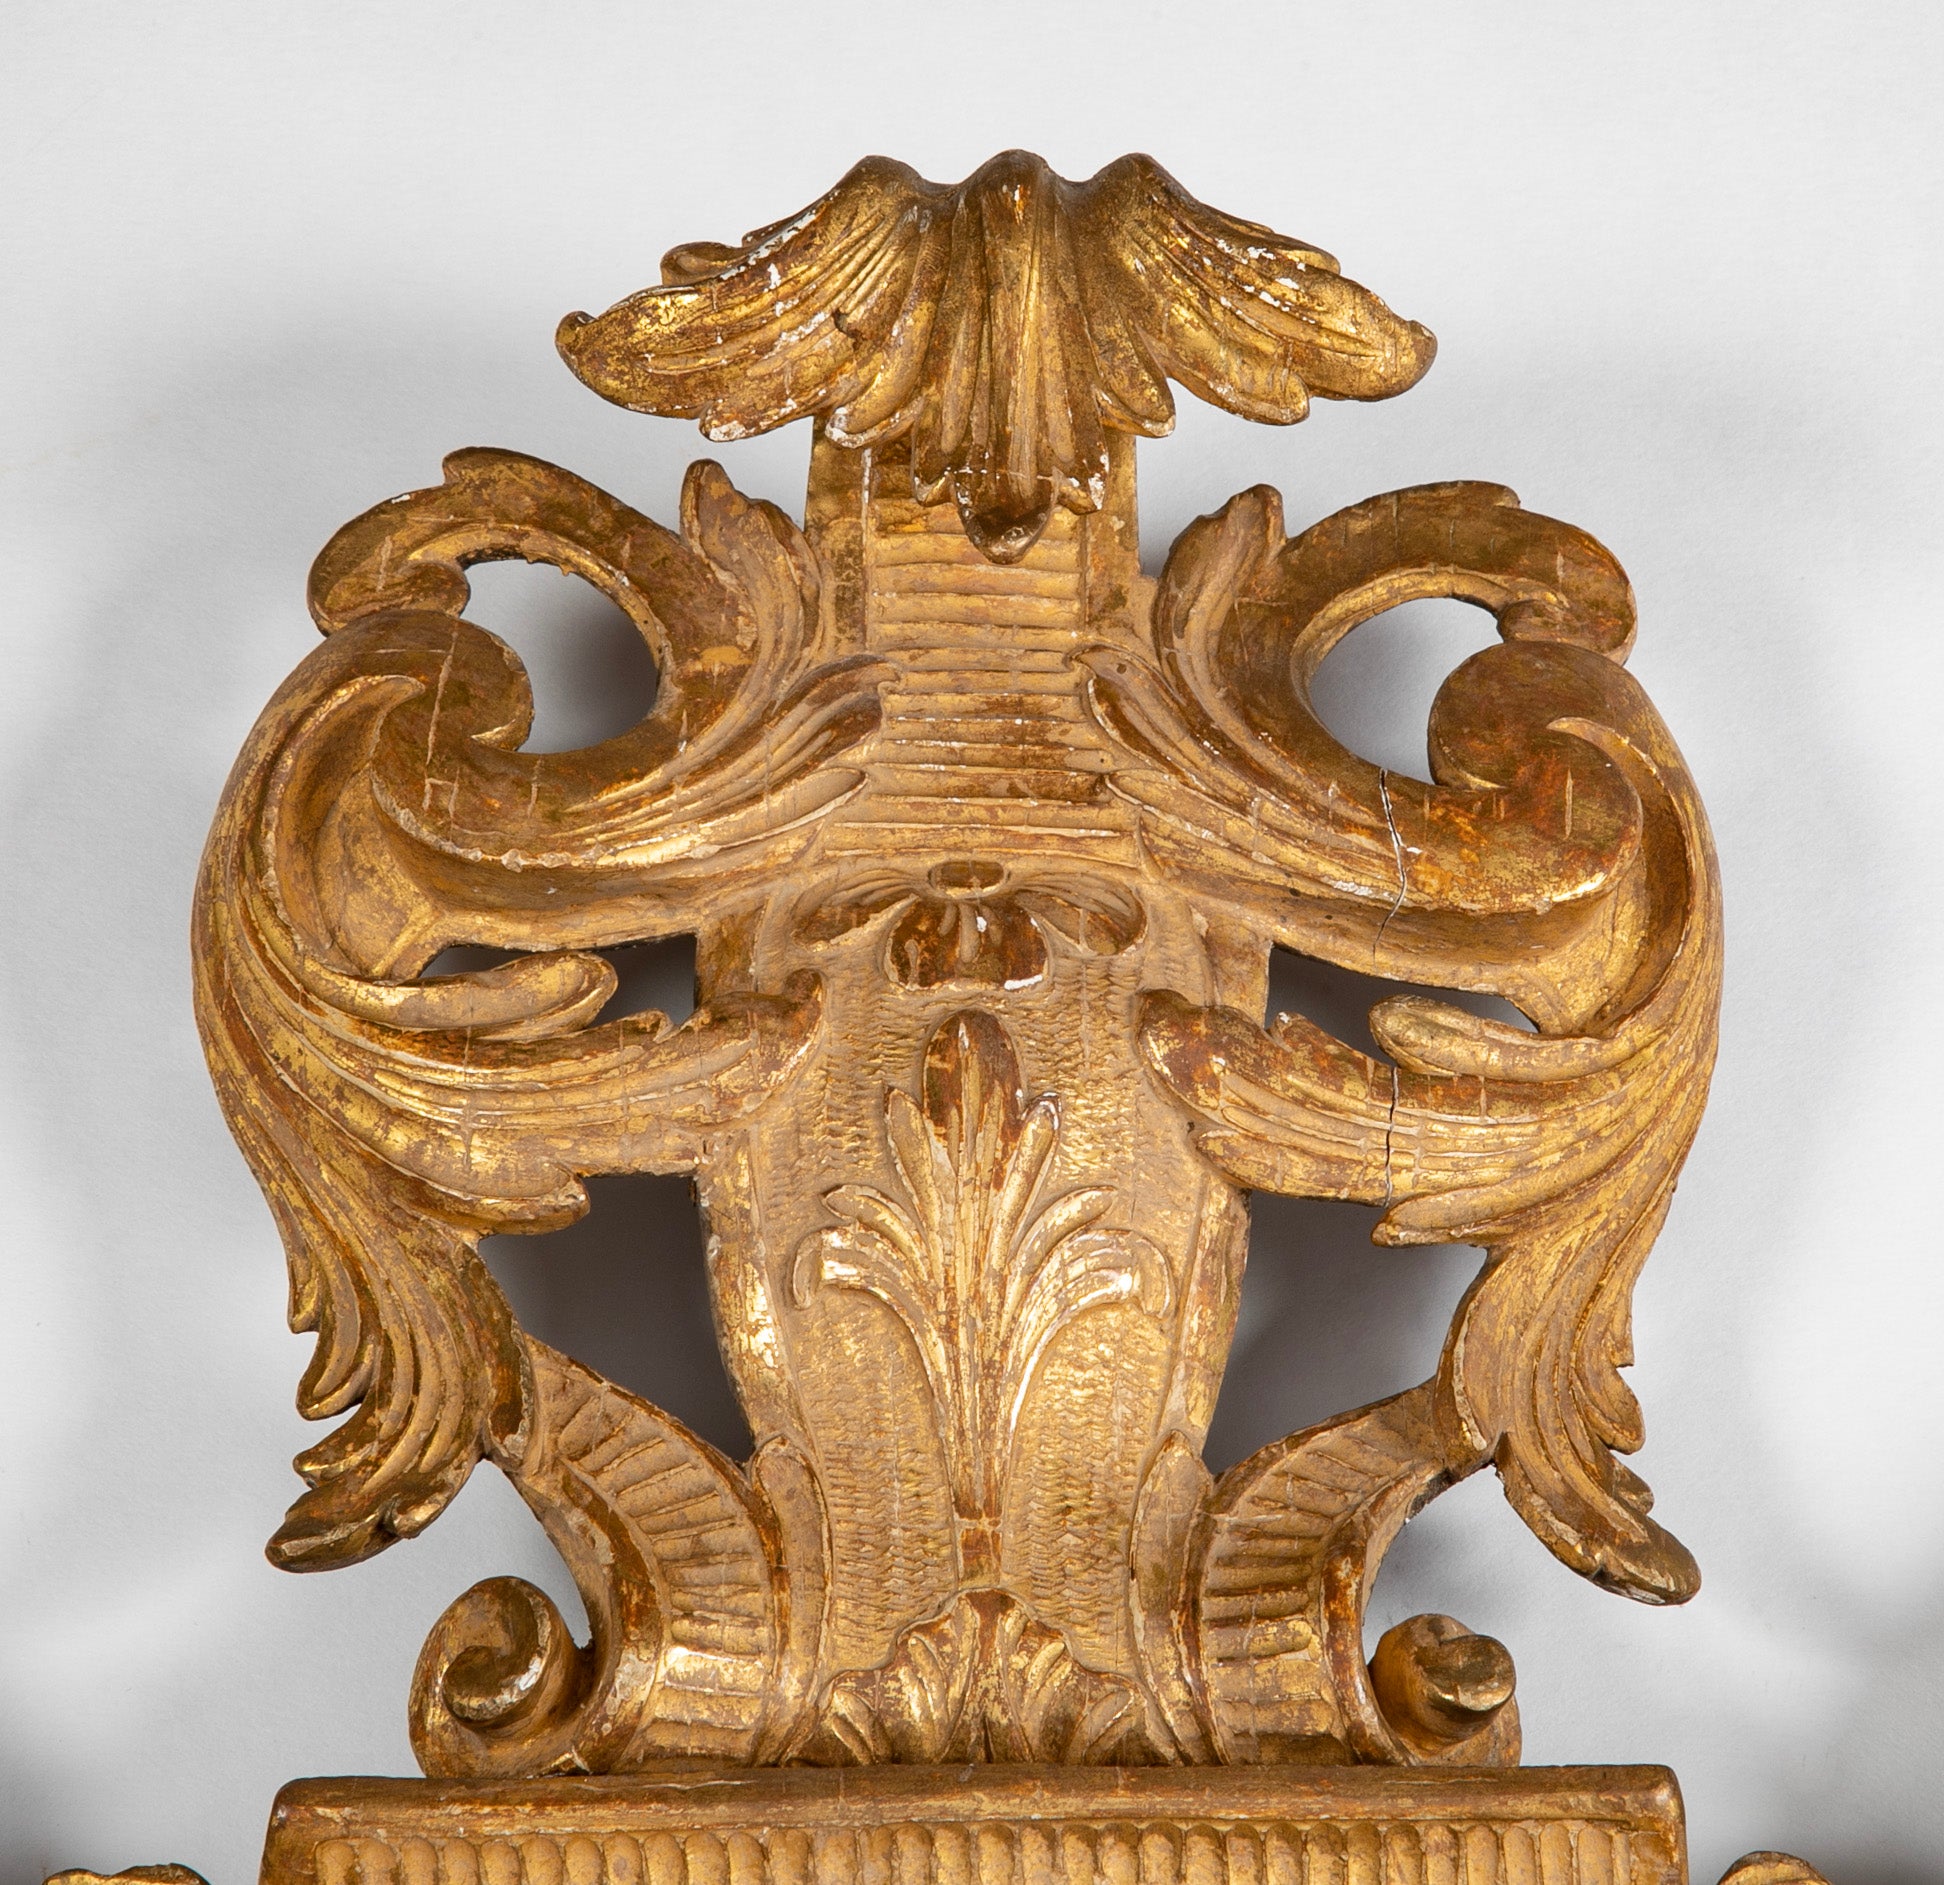 Rare Irish Mid 18th Century George II Gilded & Carved Mirror